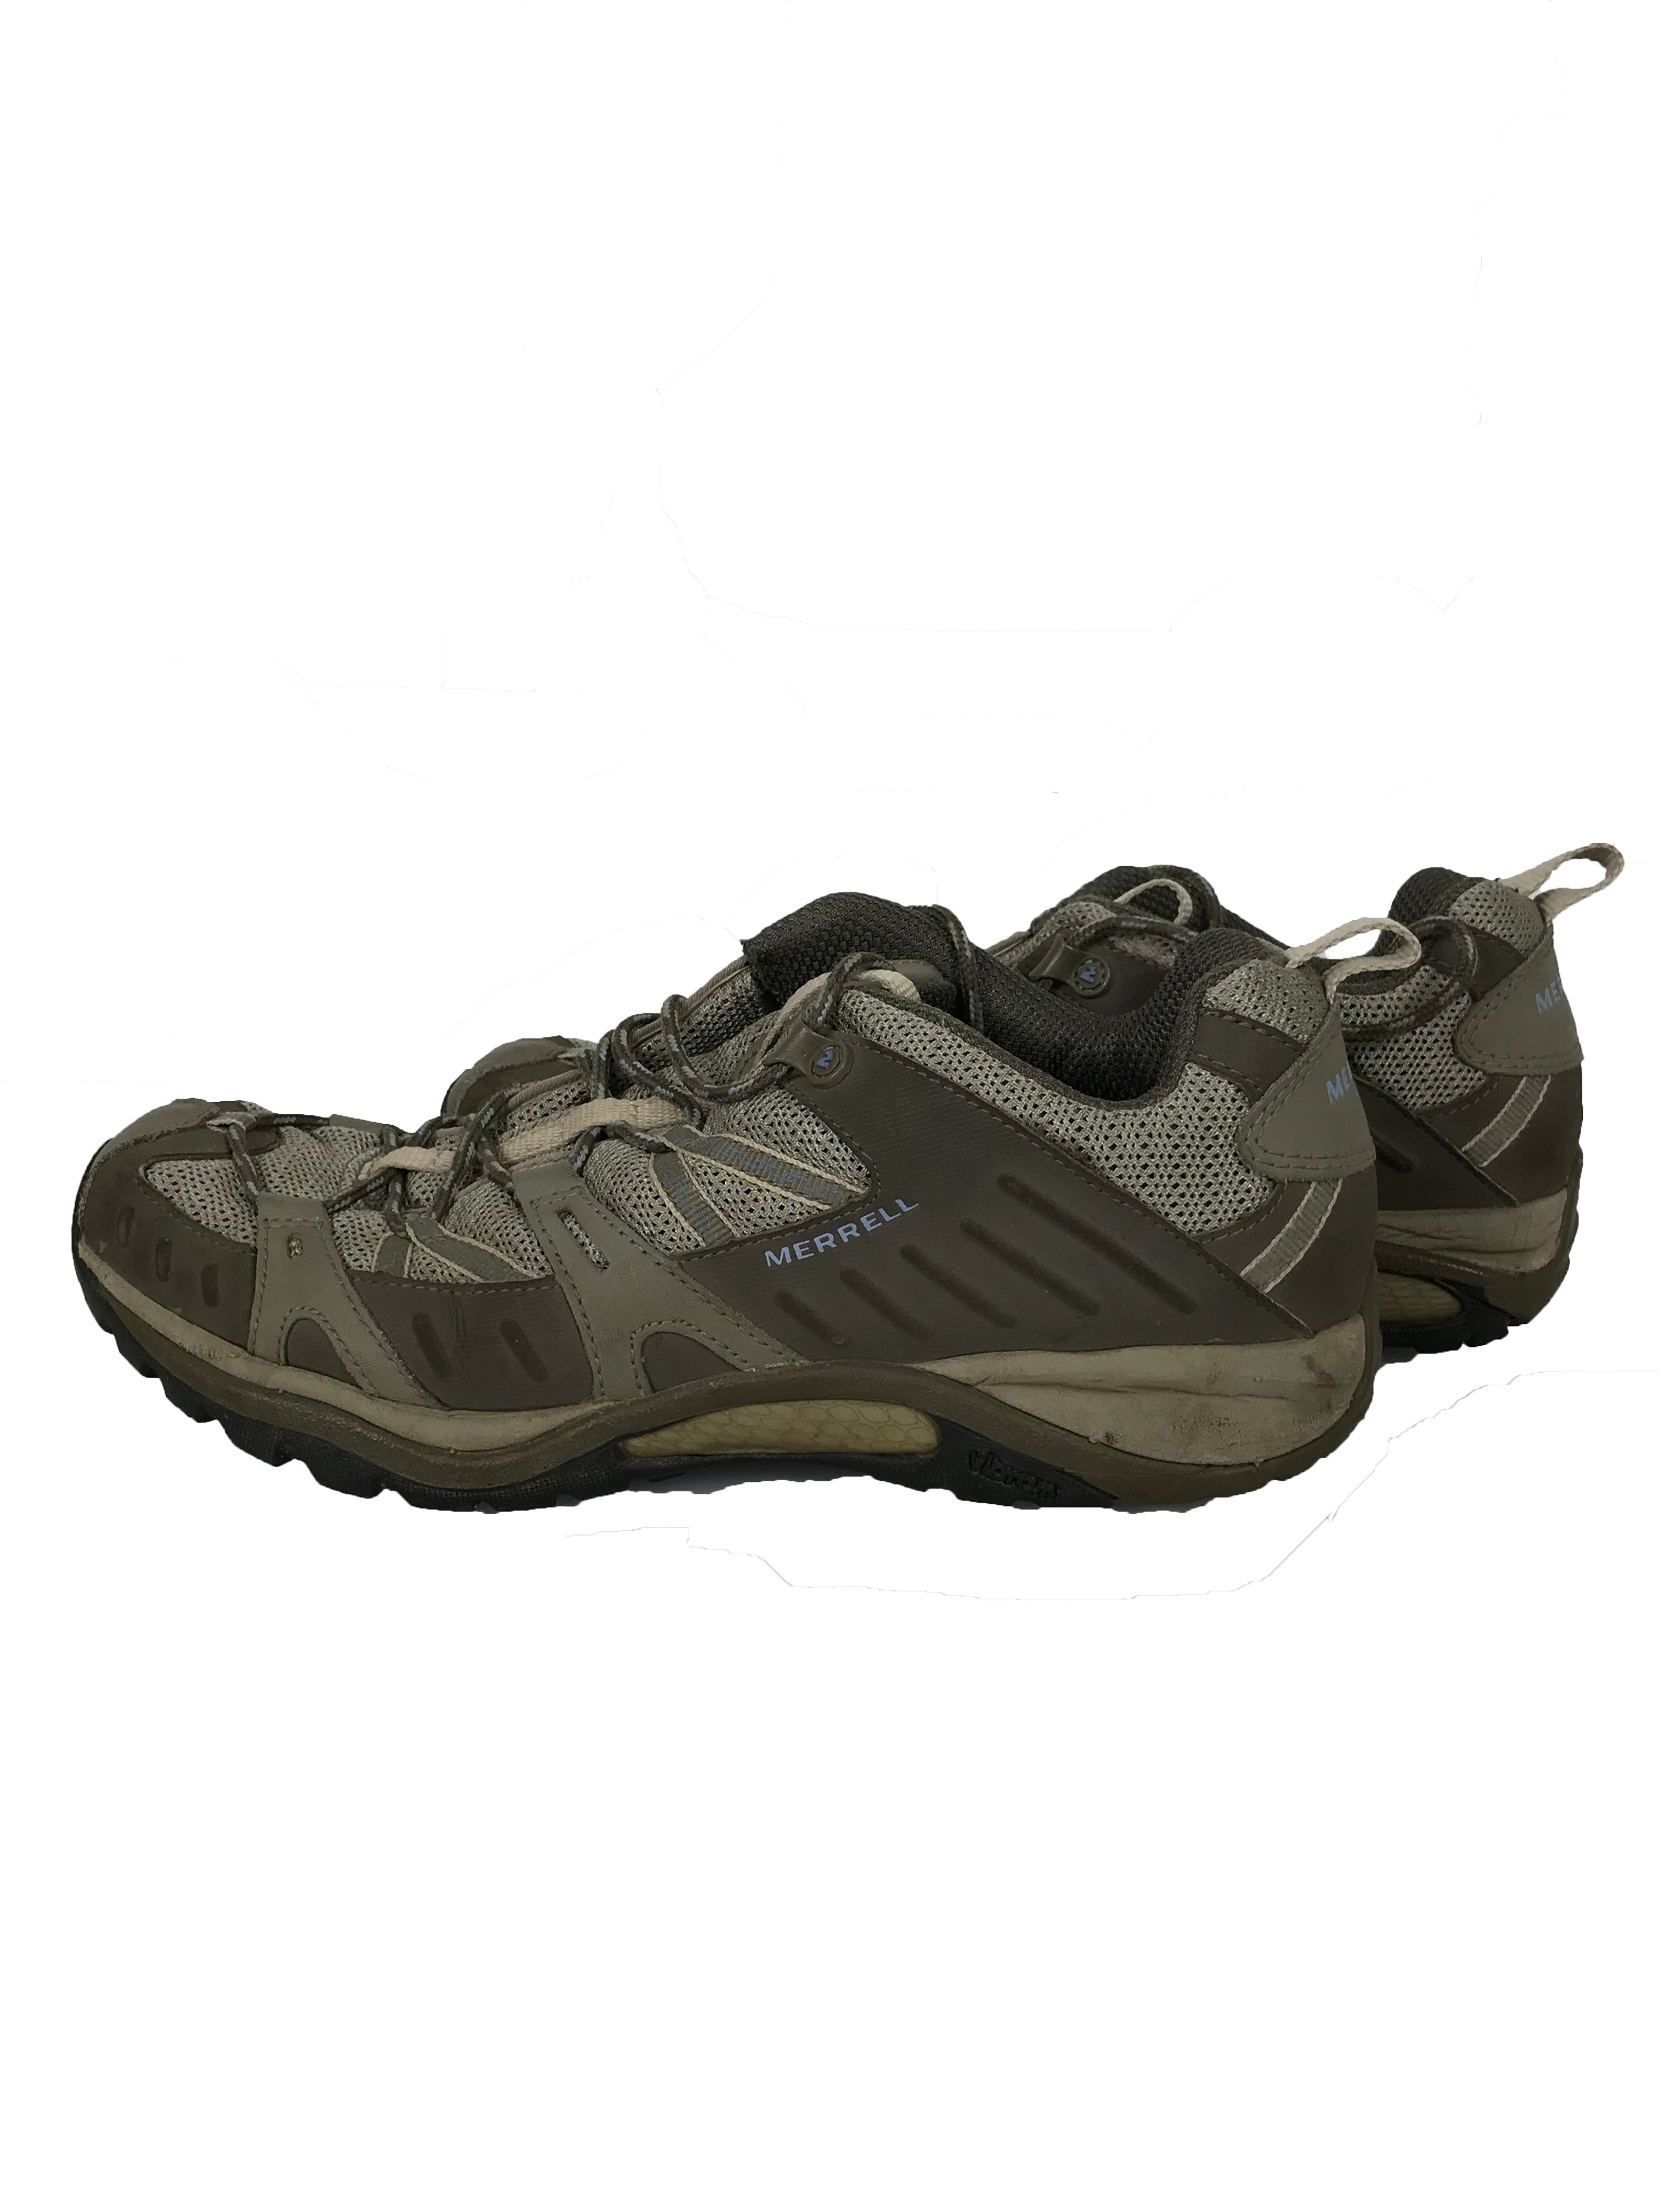 Merrell Siren Sport 2 Brown Trail Running Shoes Women's Size 10.5 – MSU